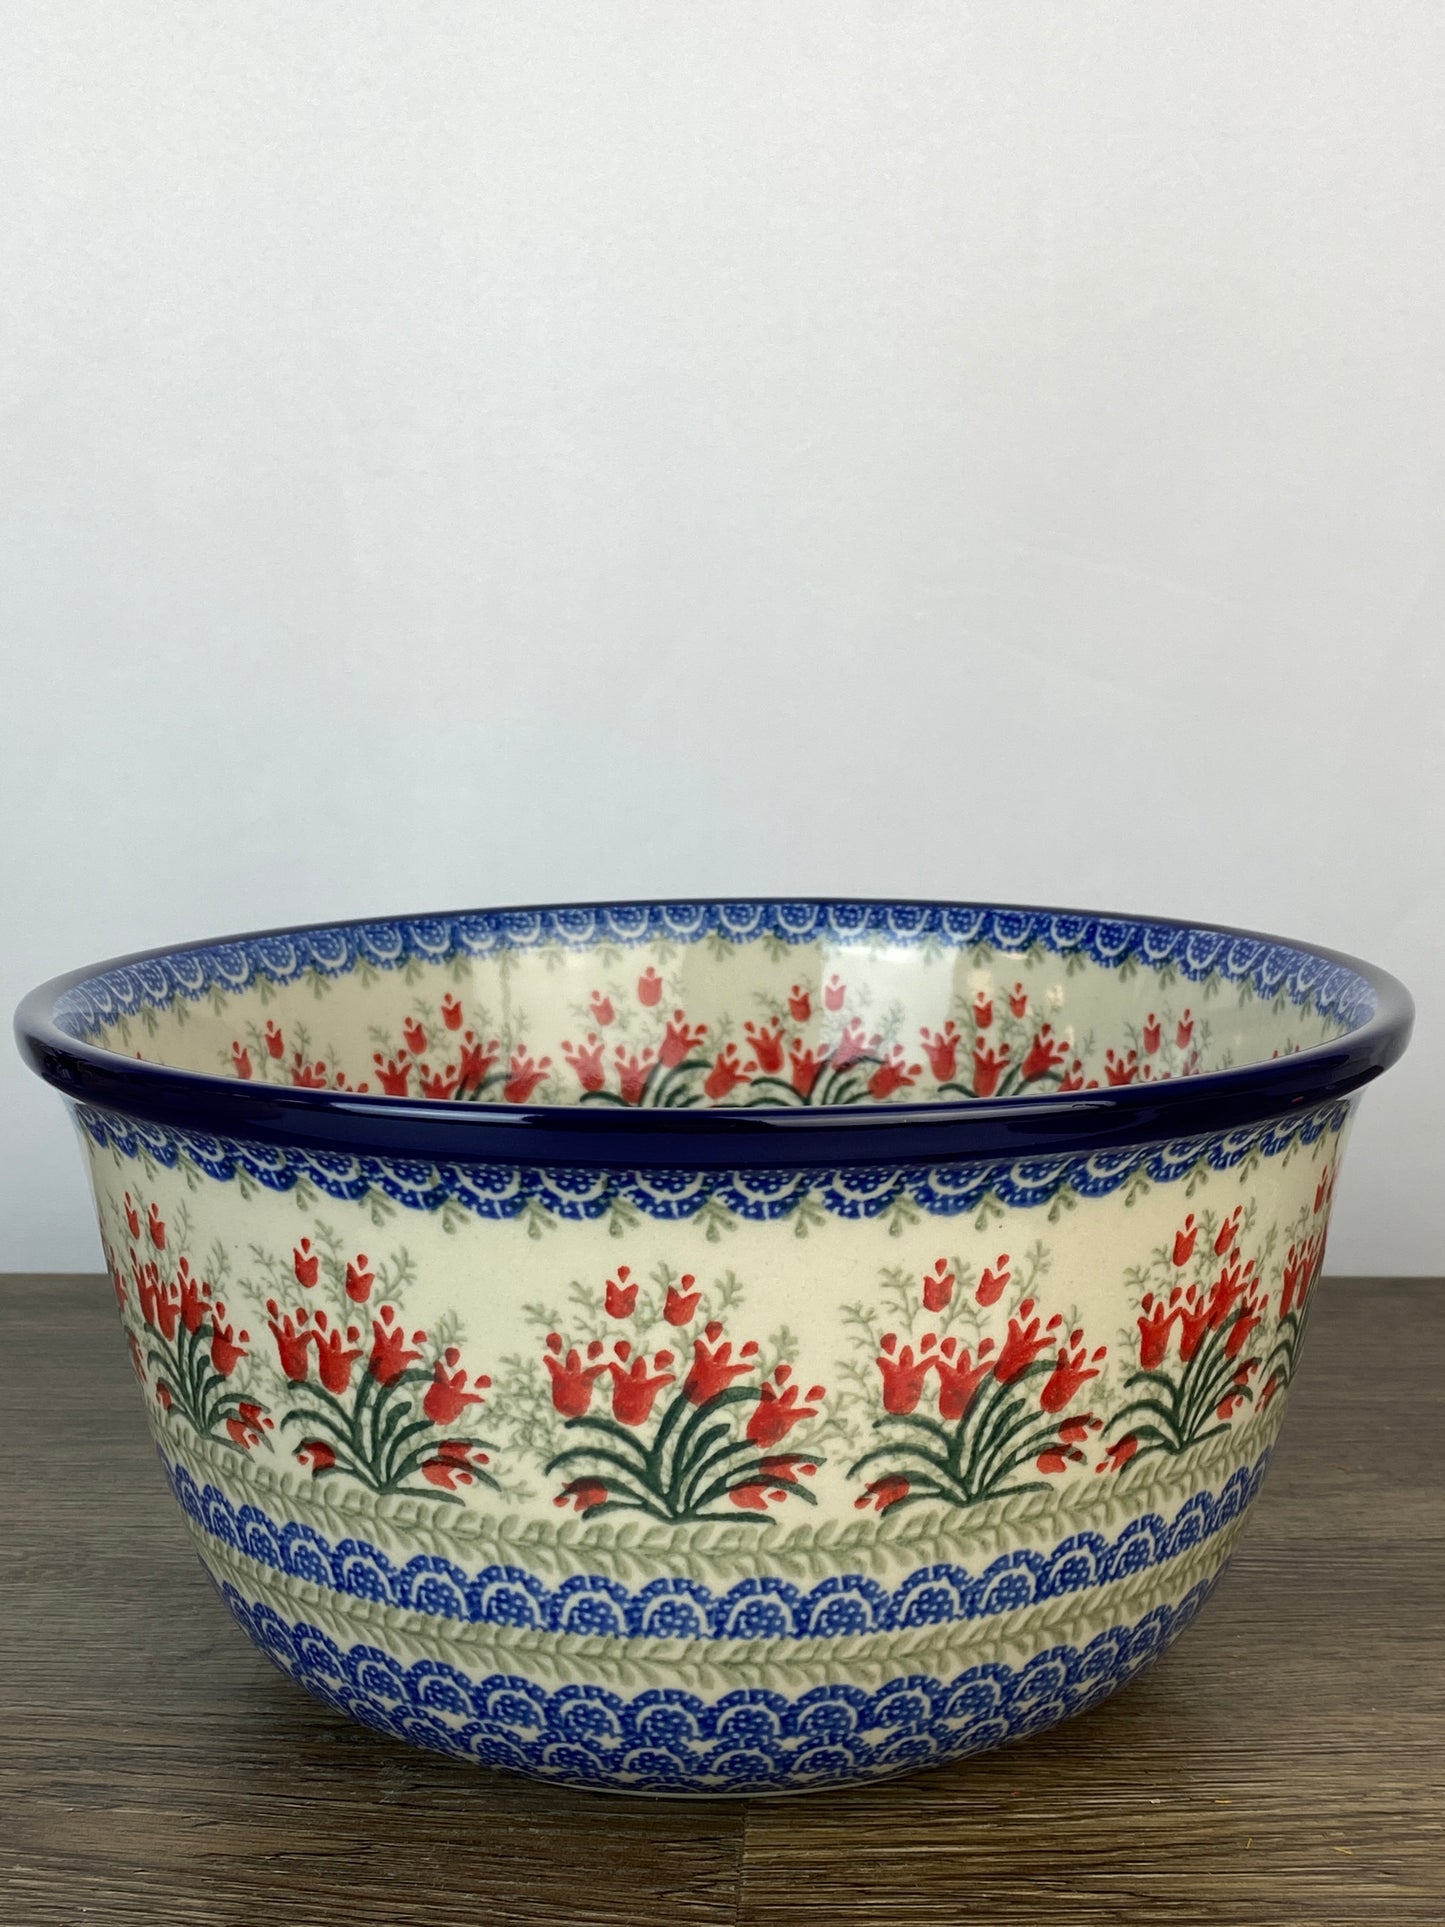 Large Mixing Bowl - Shape 113 - Pattern 1437